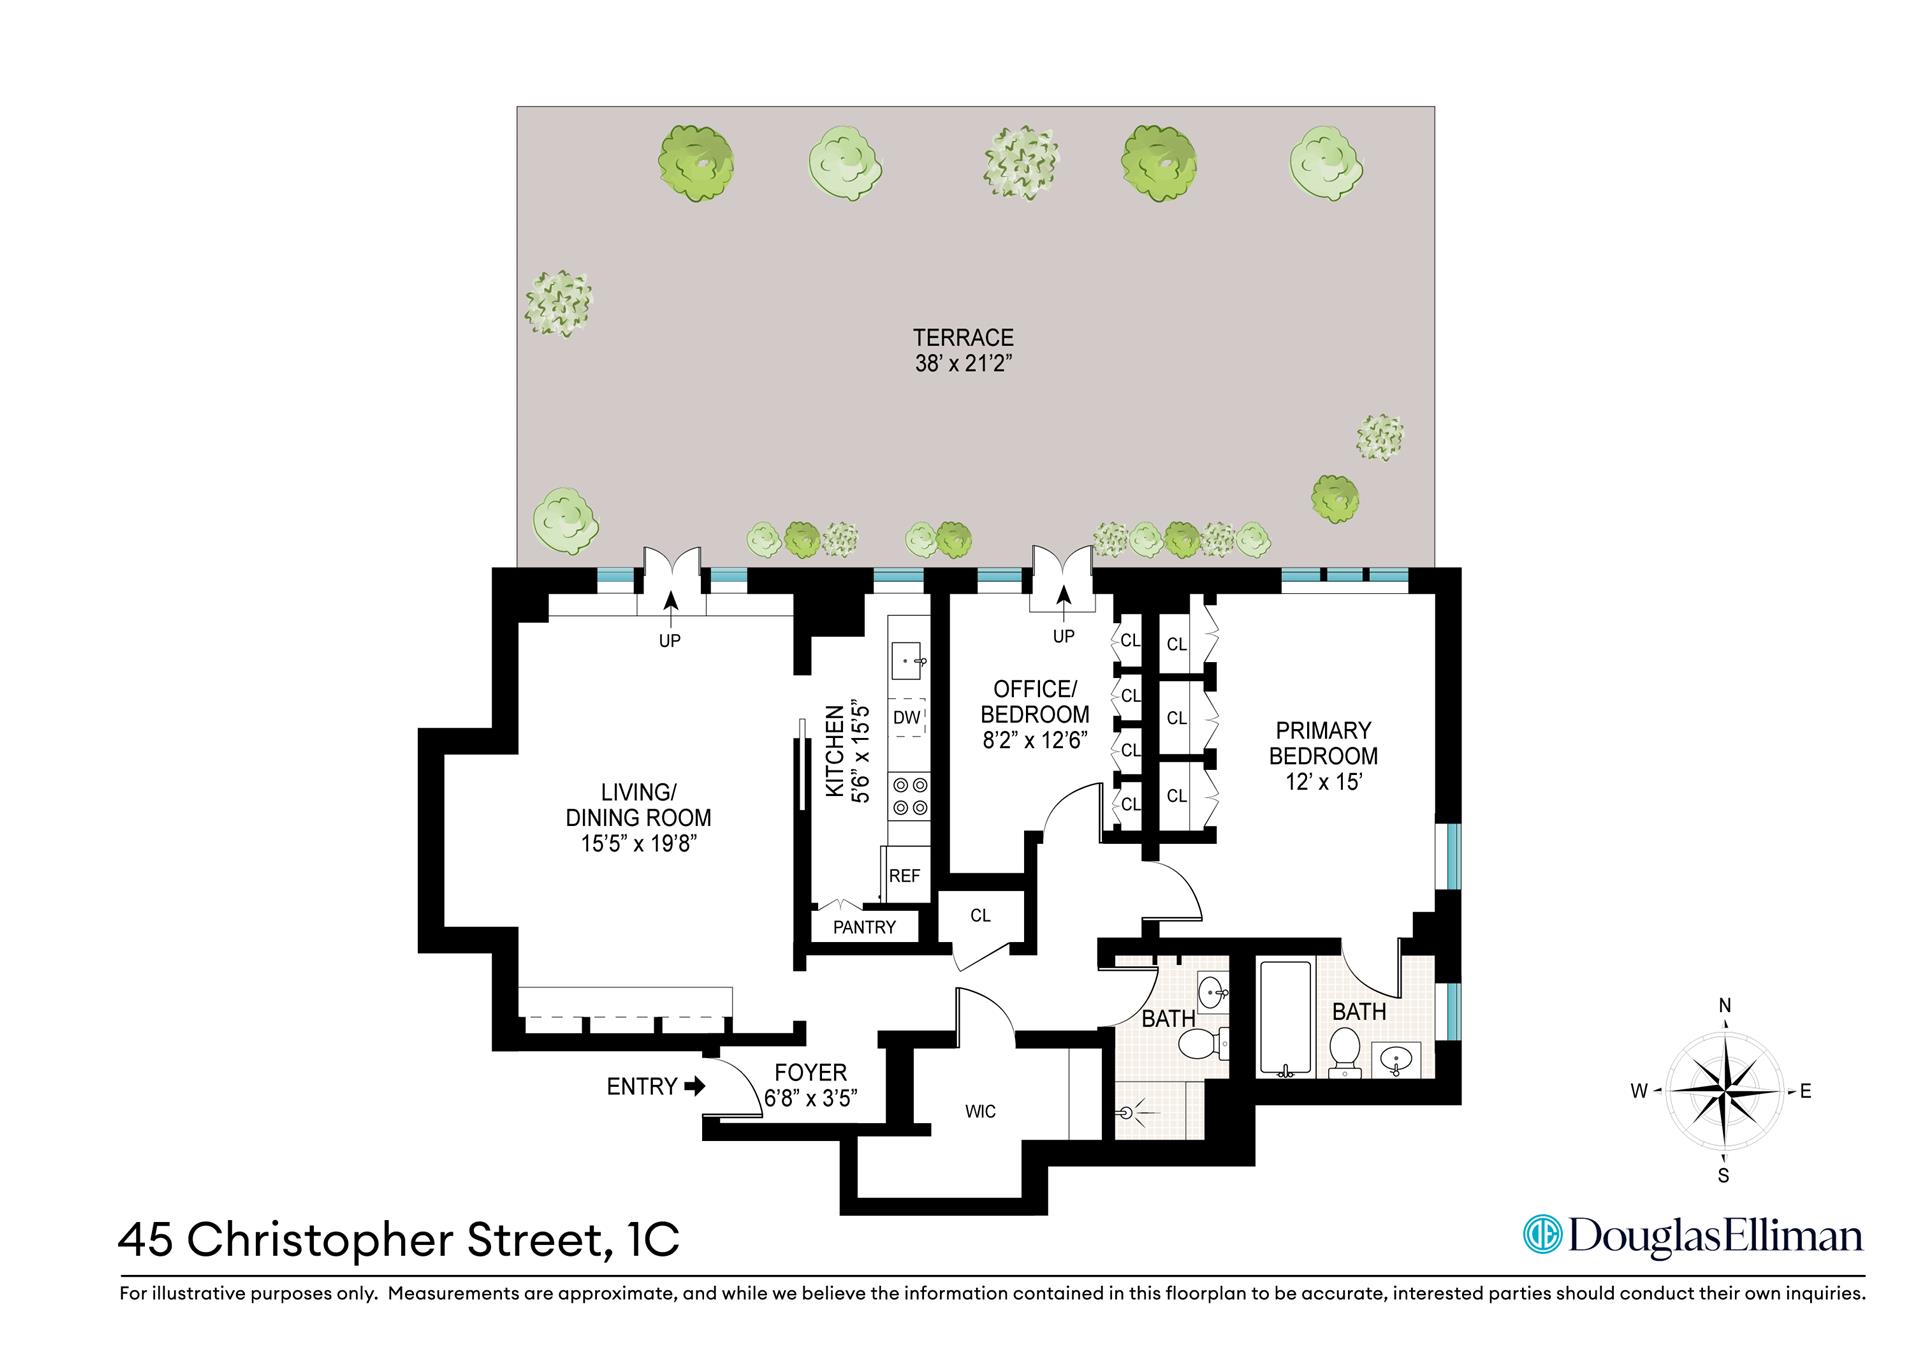 Floorplan for 45 Christopher Street, 1C